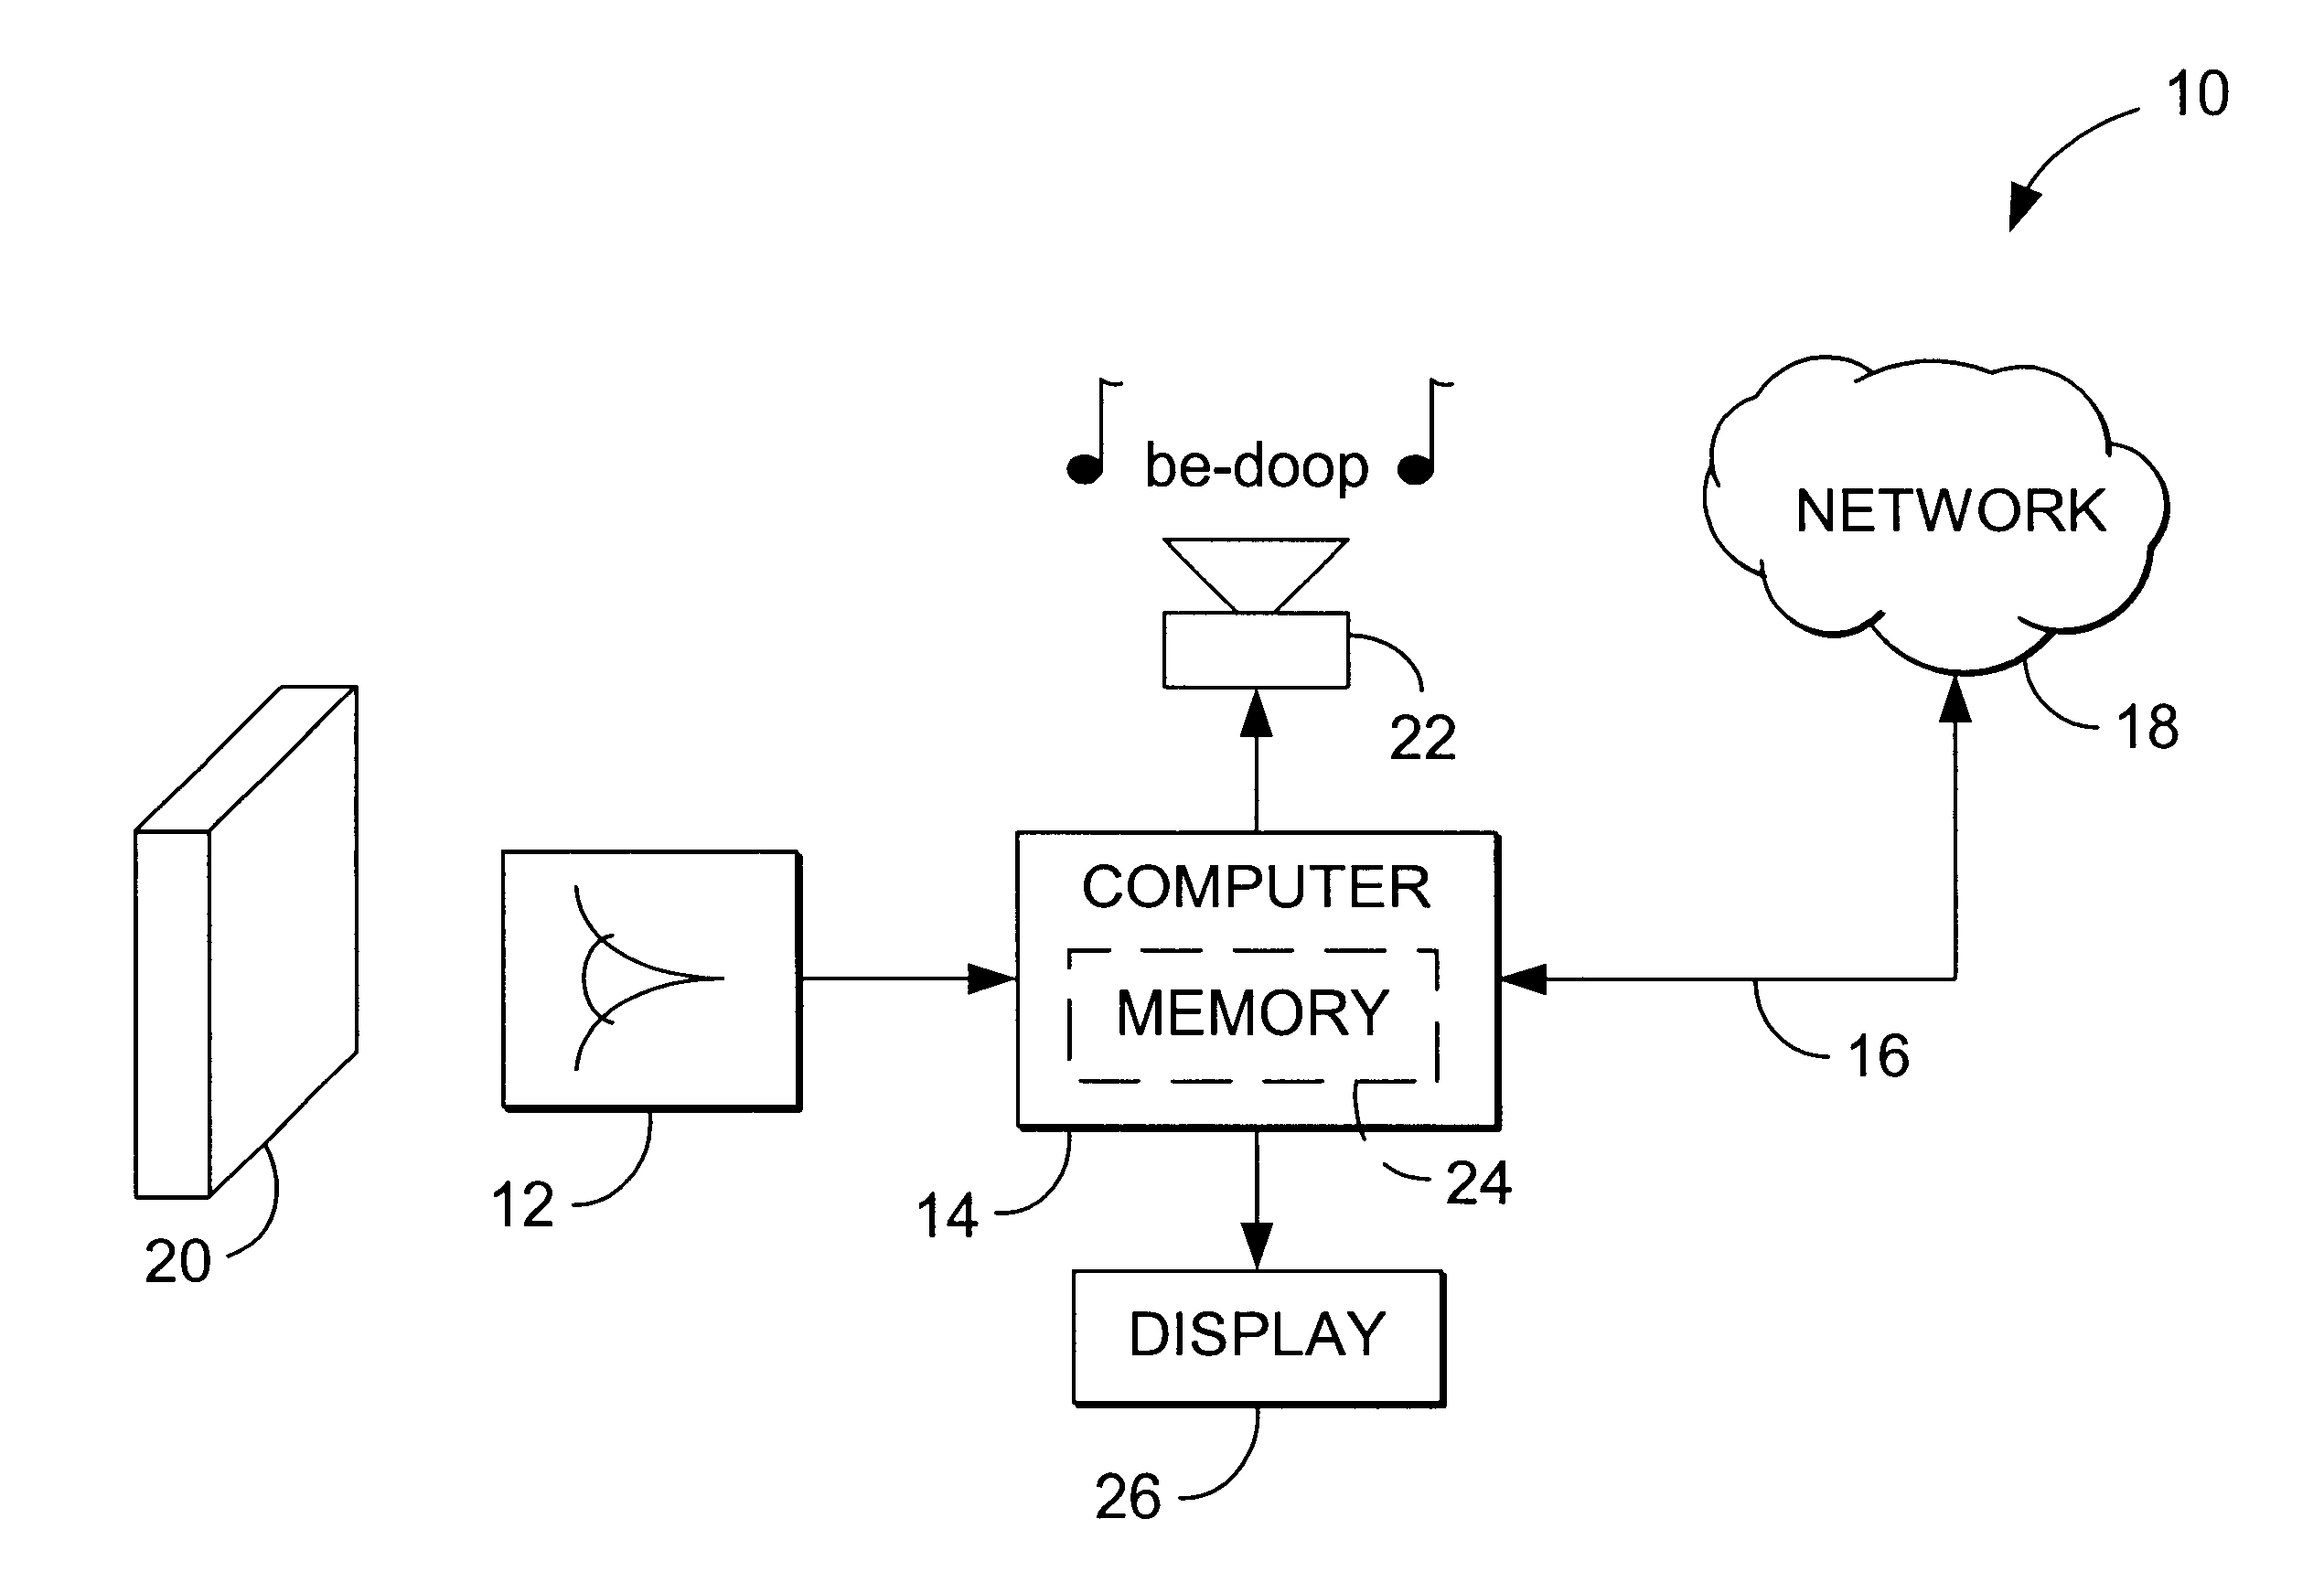 Linking of computers based on optical sensing of digital data